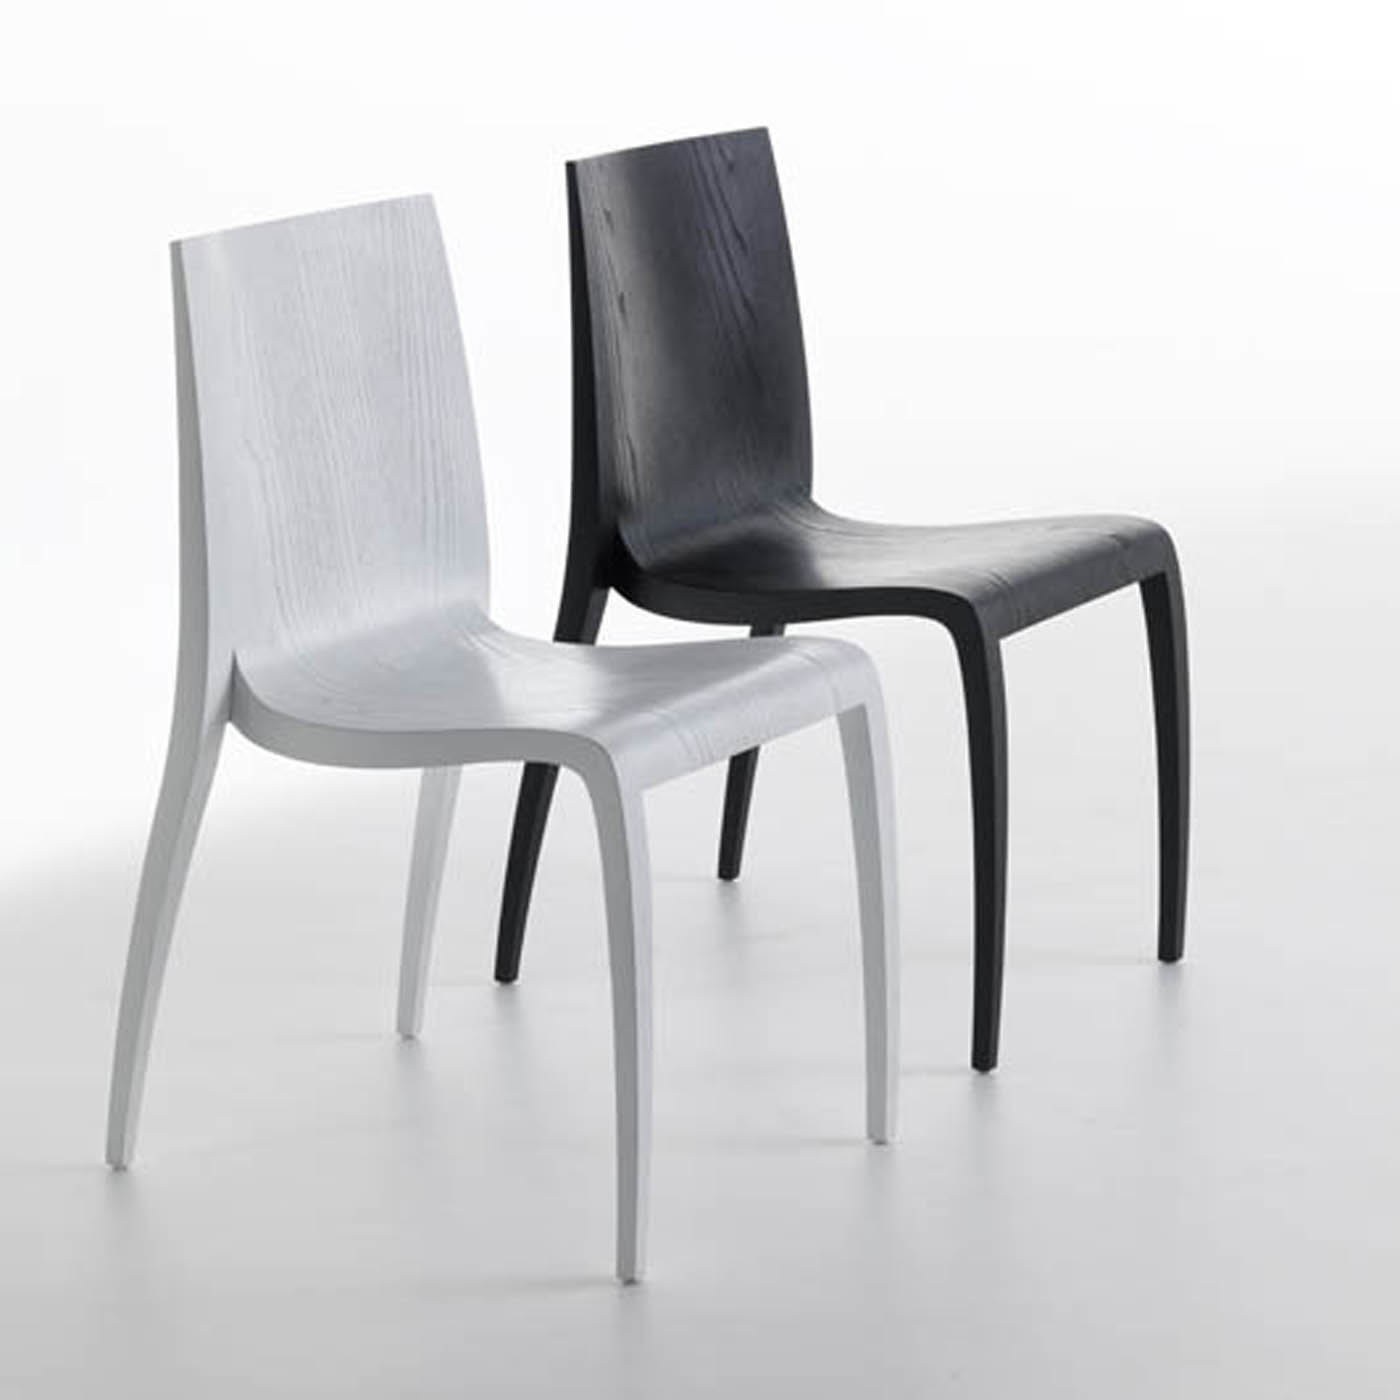 Ki Black Chair by Mario Bellini Horm | Artemest